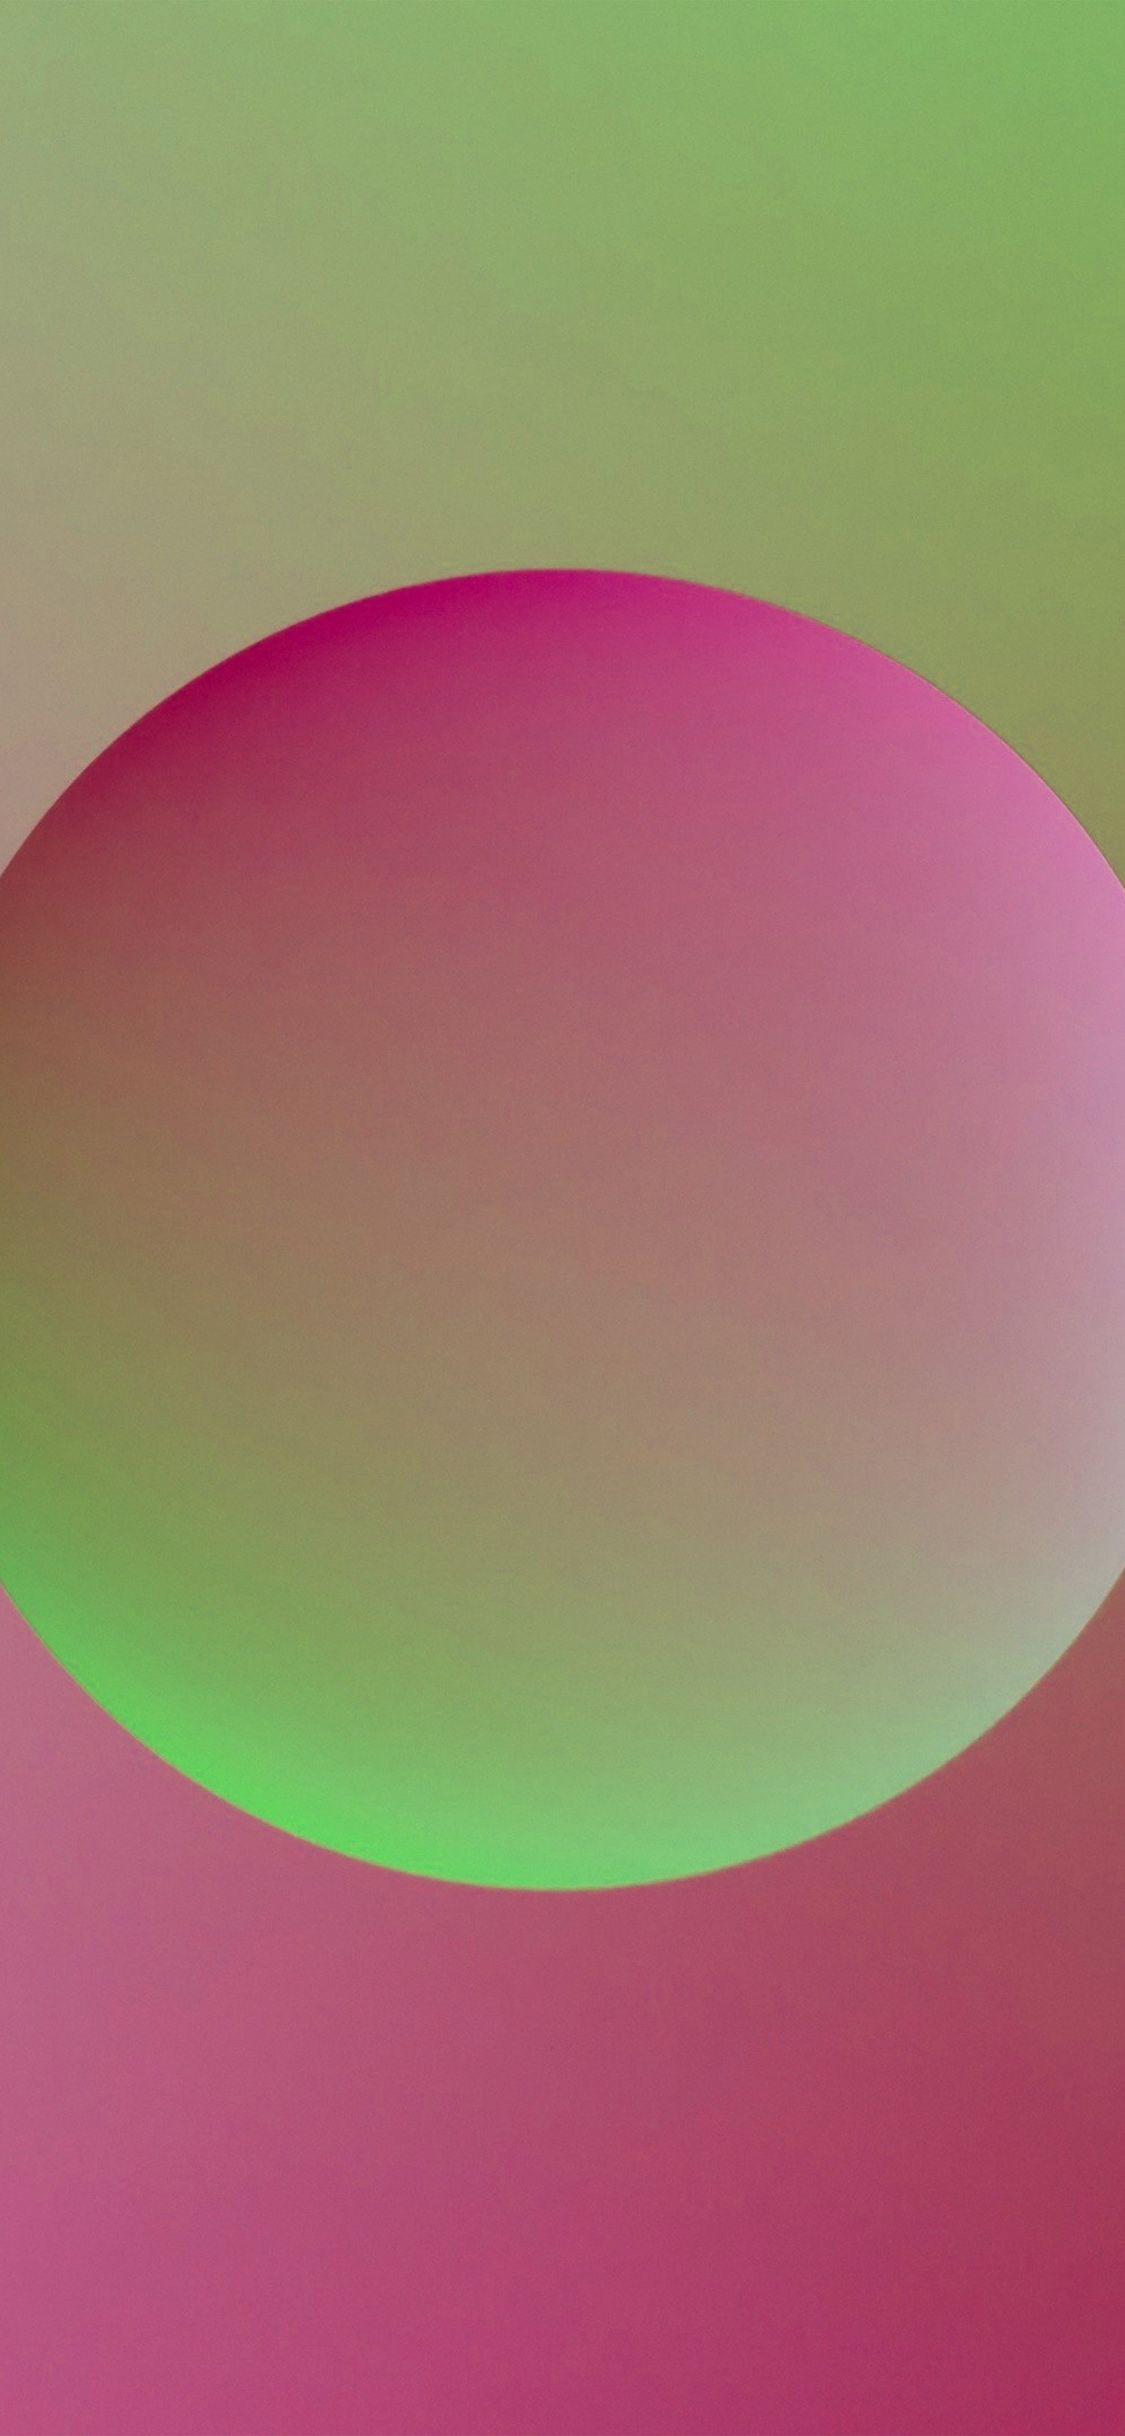 iPhone X wallpaper. minimal ball